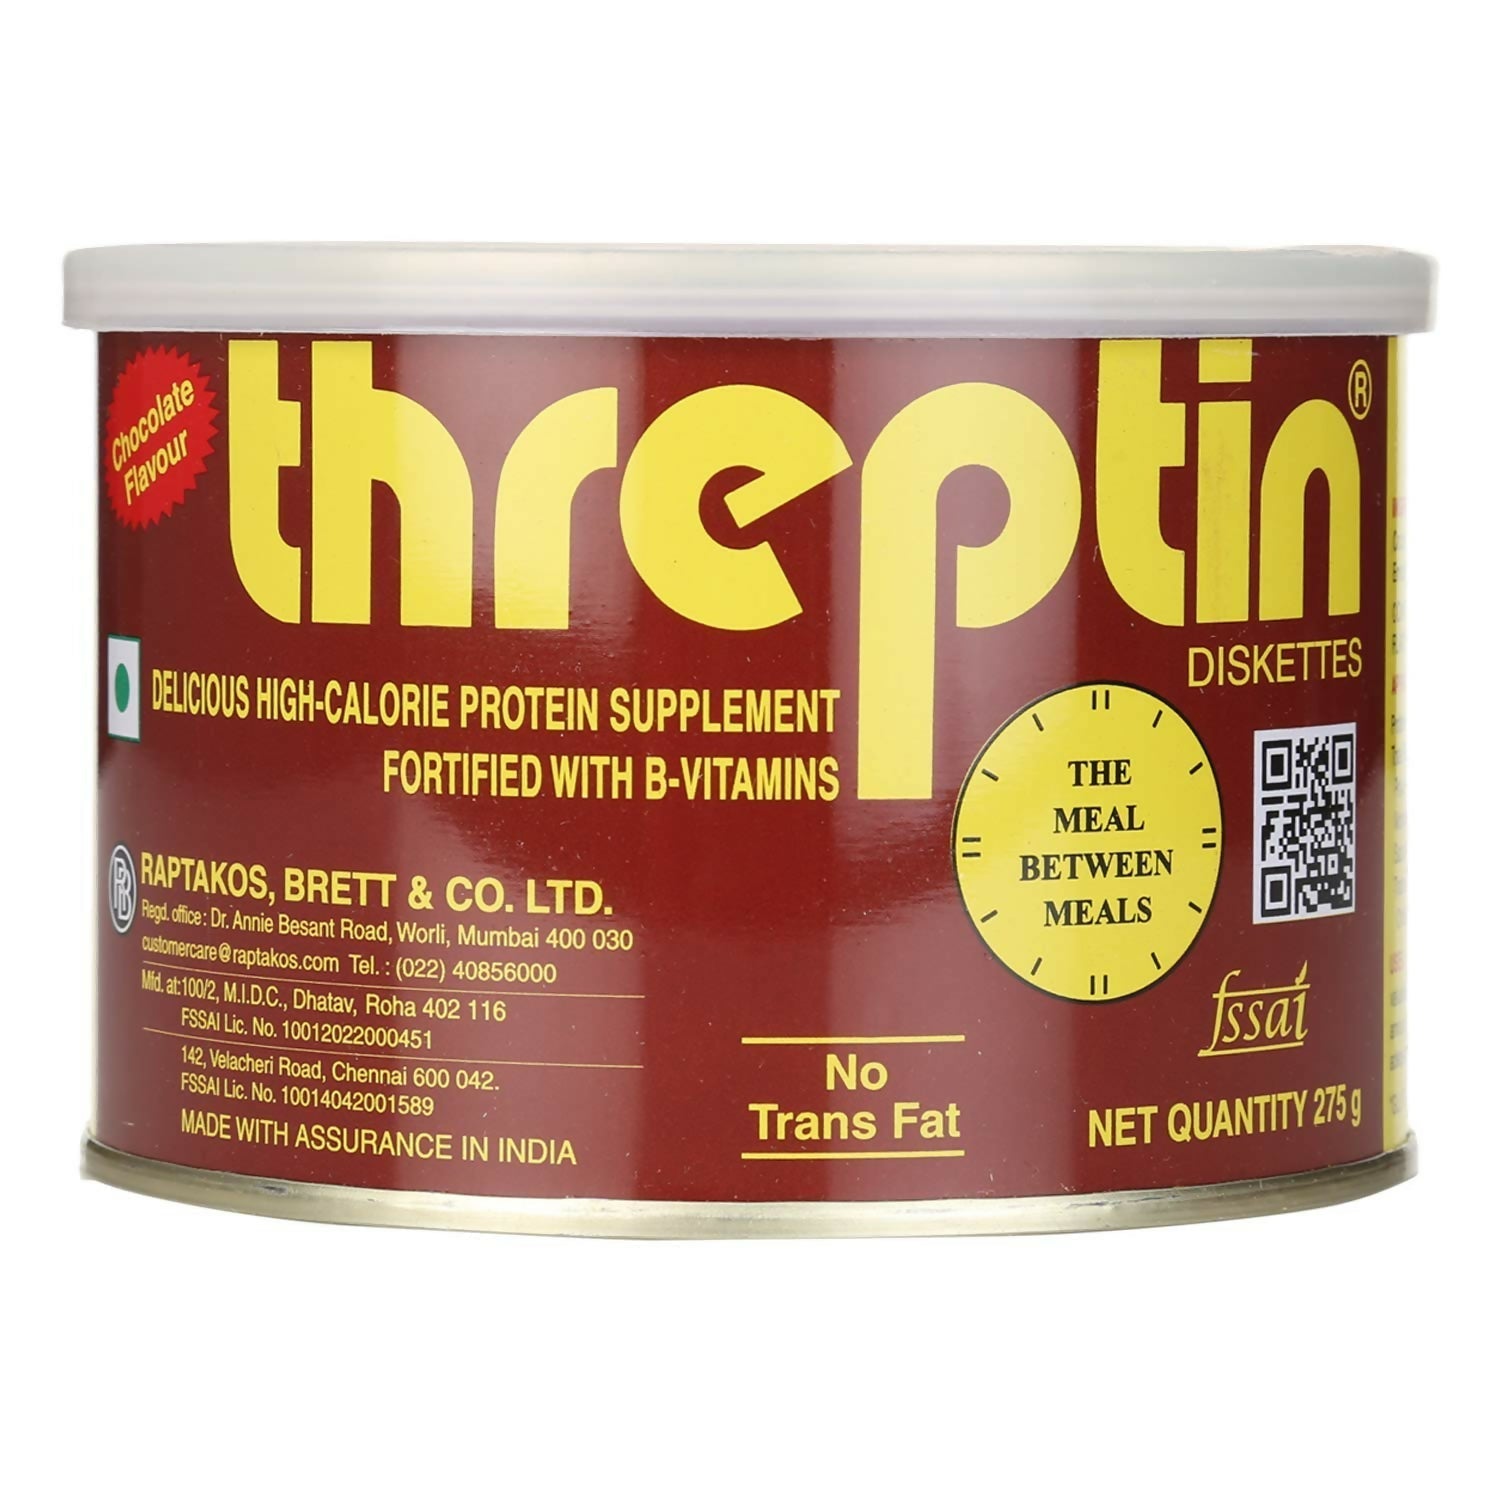 Threptin High-Calorie Protein Diskettes - Chocolate Flavor - BUDNE